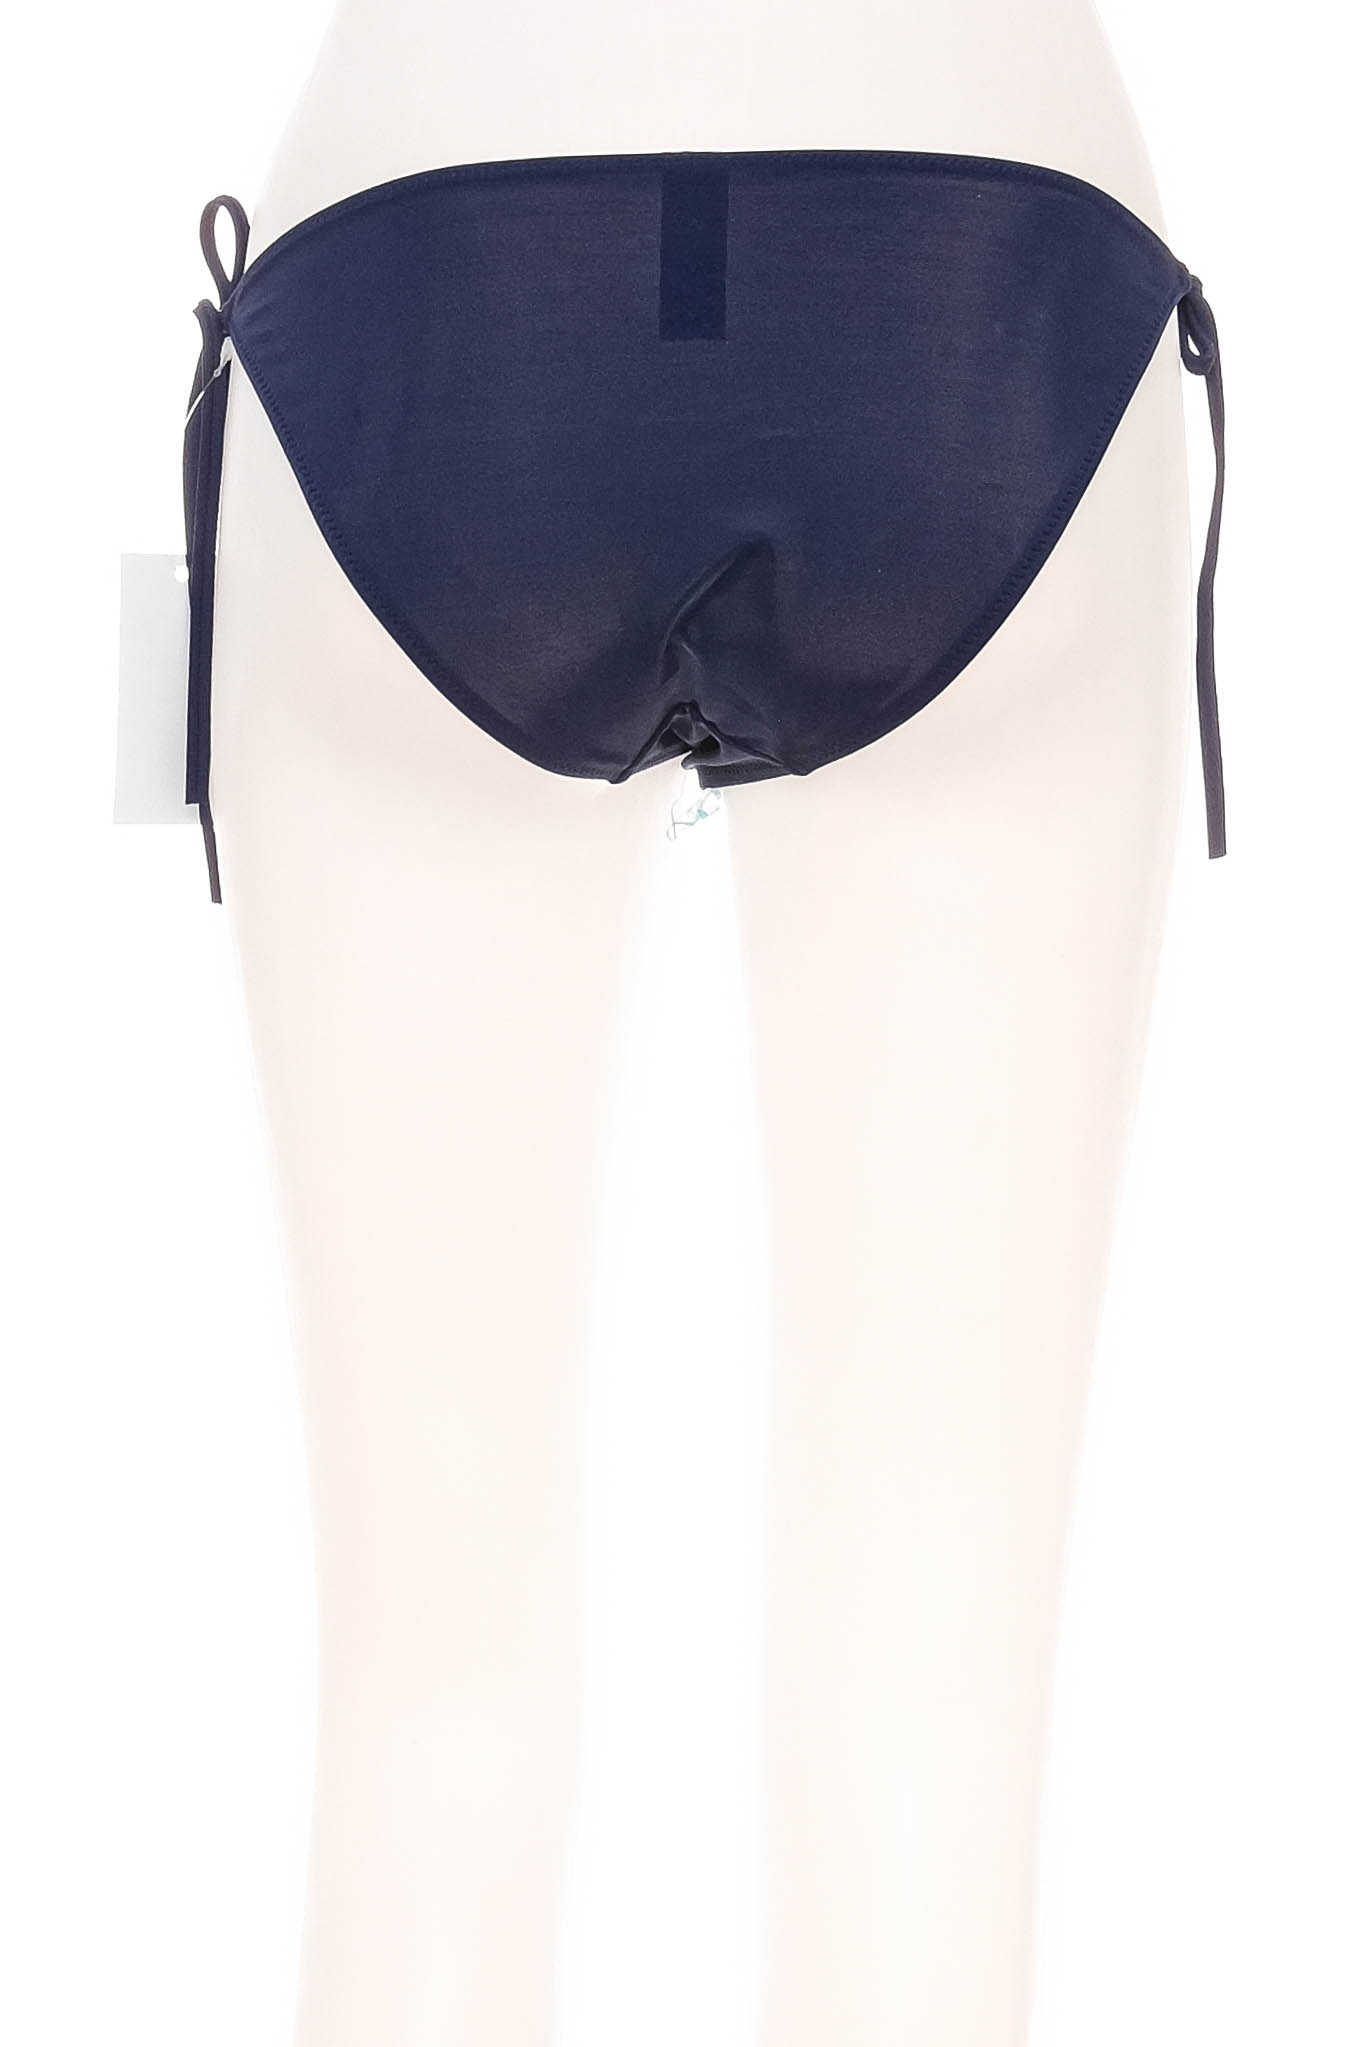 Women's swimsuit bottoms - Zalando essentials - 1